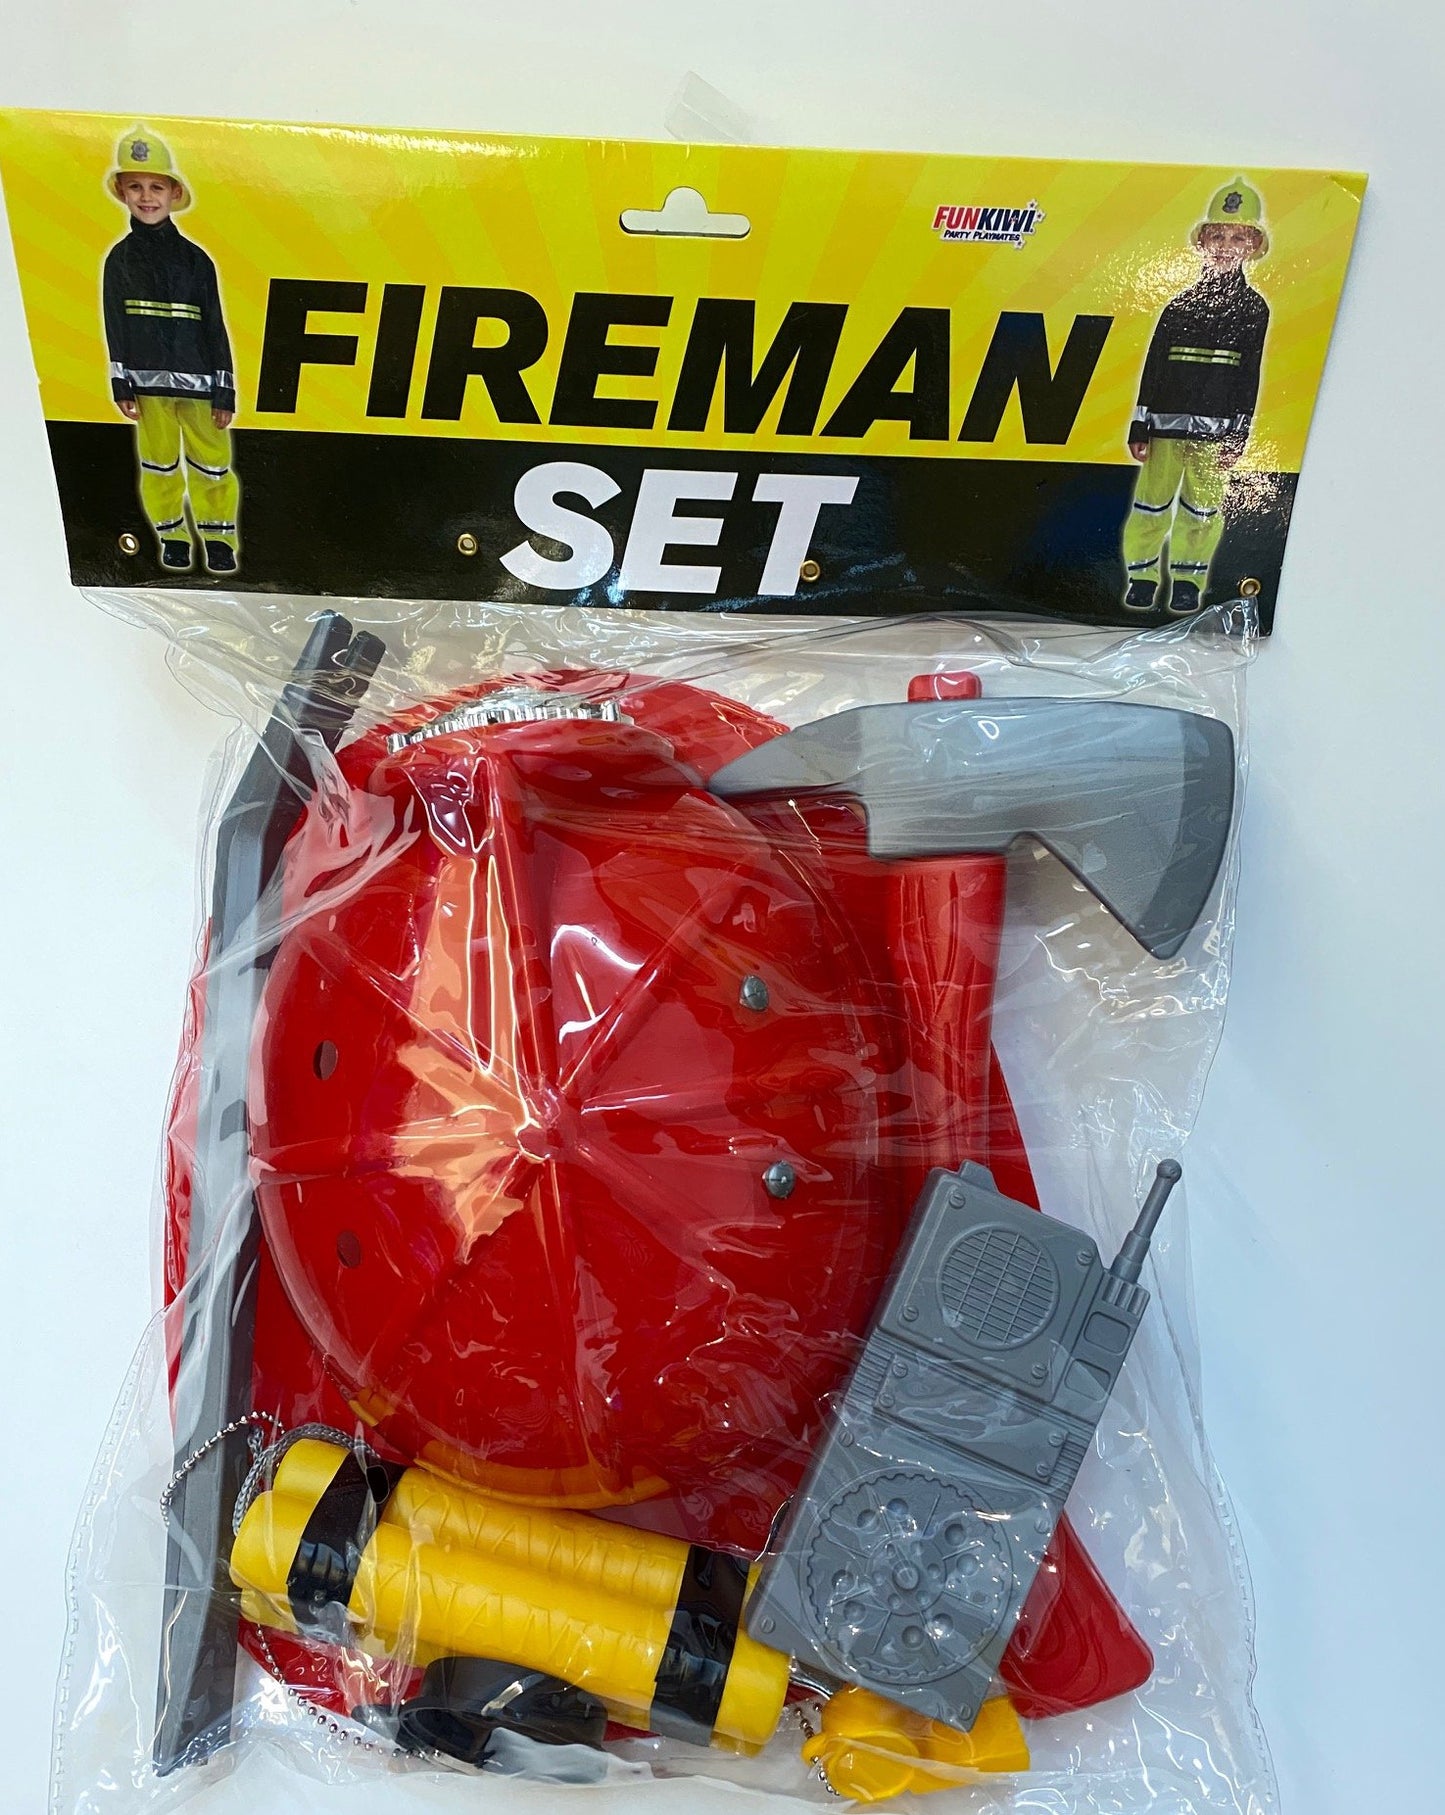 Fireman set